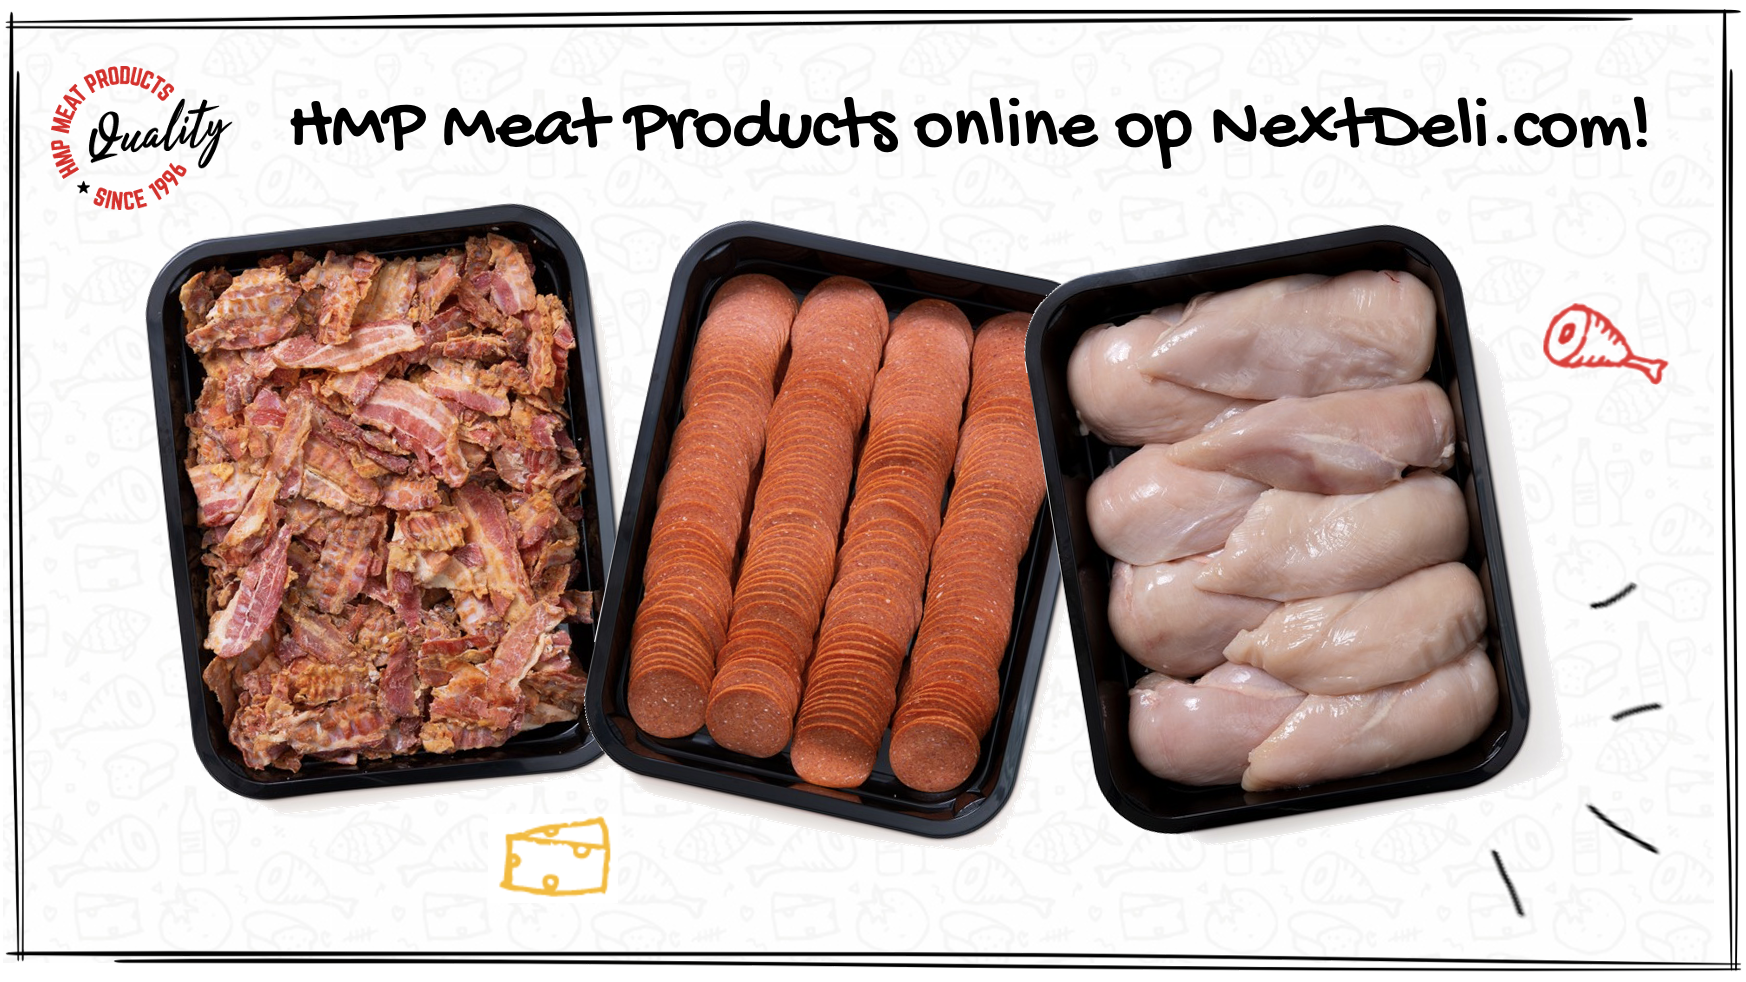 NIEUW: HMP Meat Products